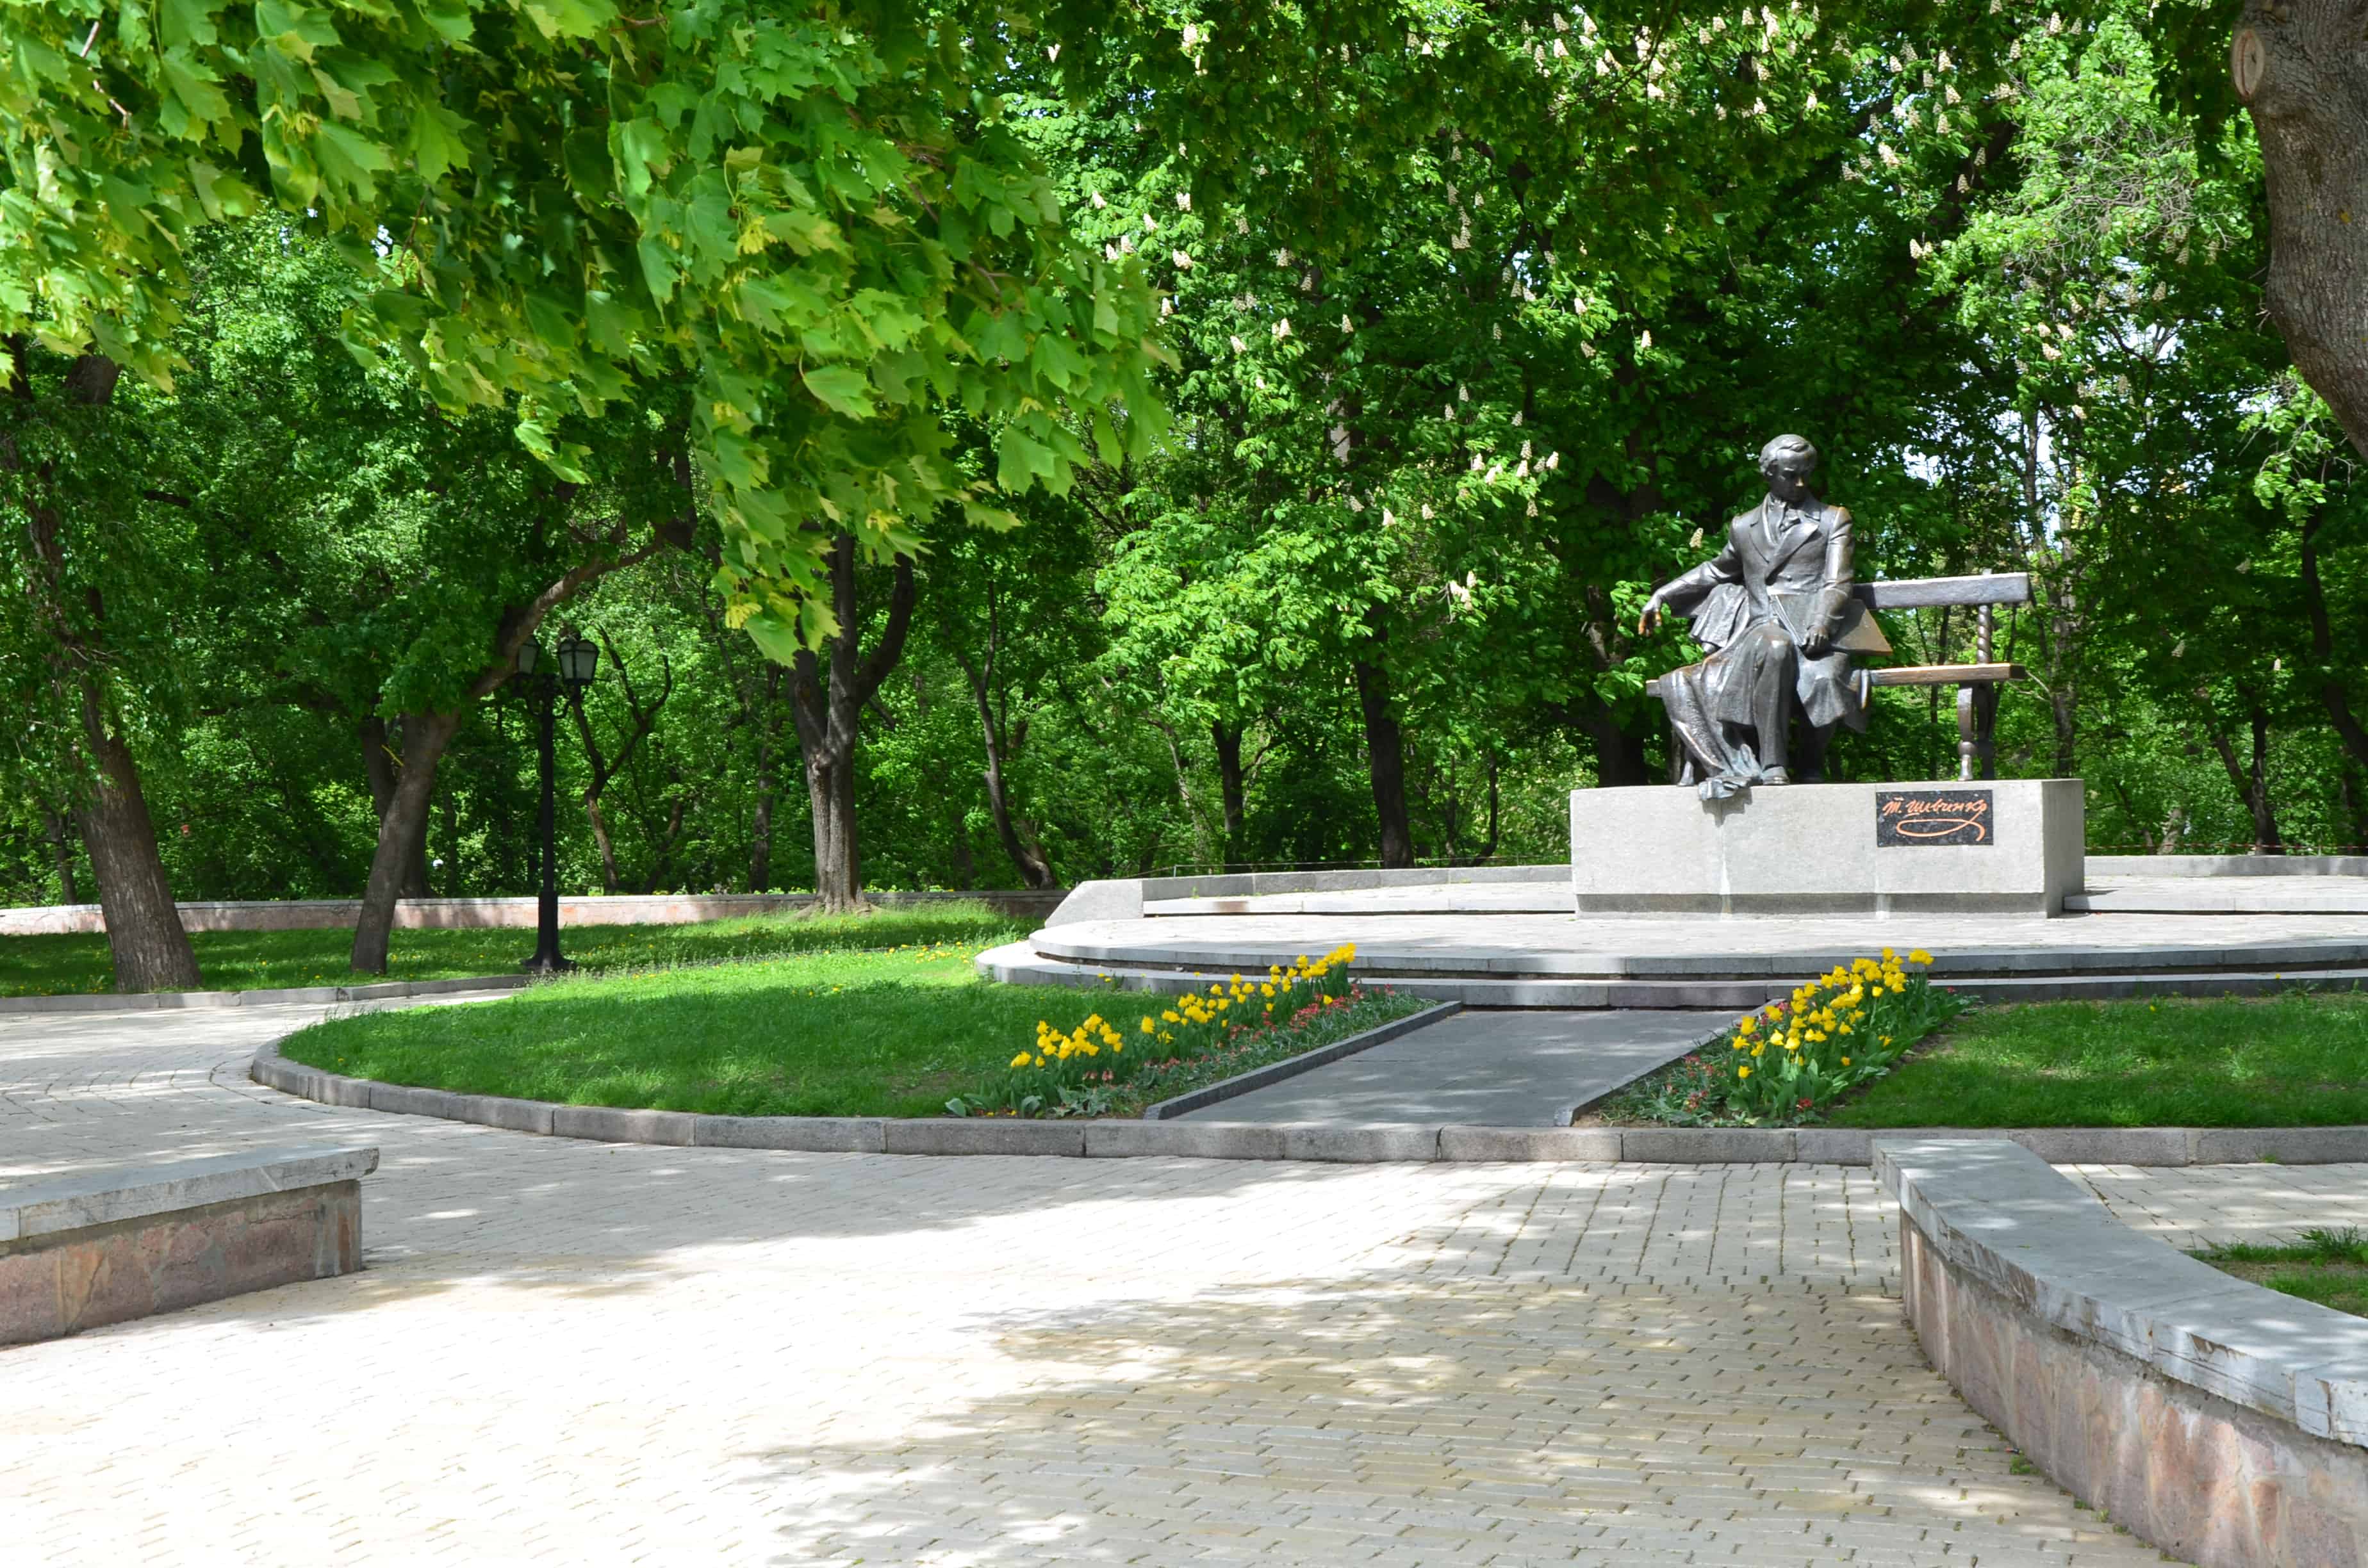 Taras Shevchenko monument at Detinets Park in Chernihiv, Ukraine